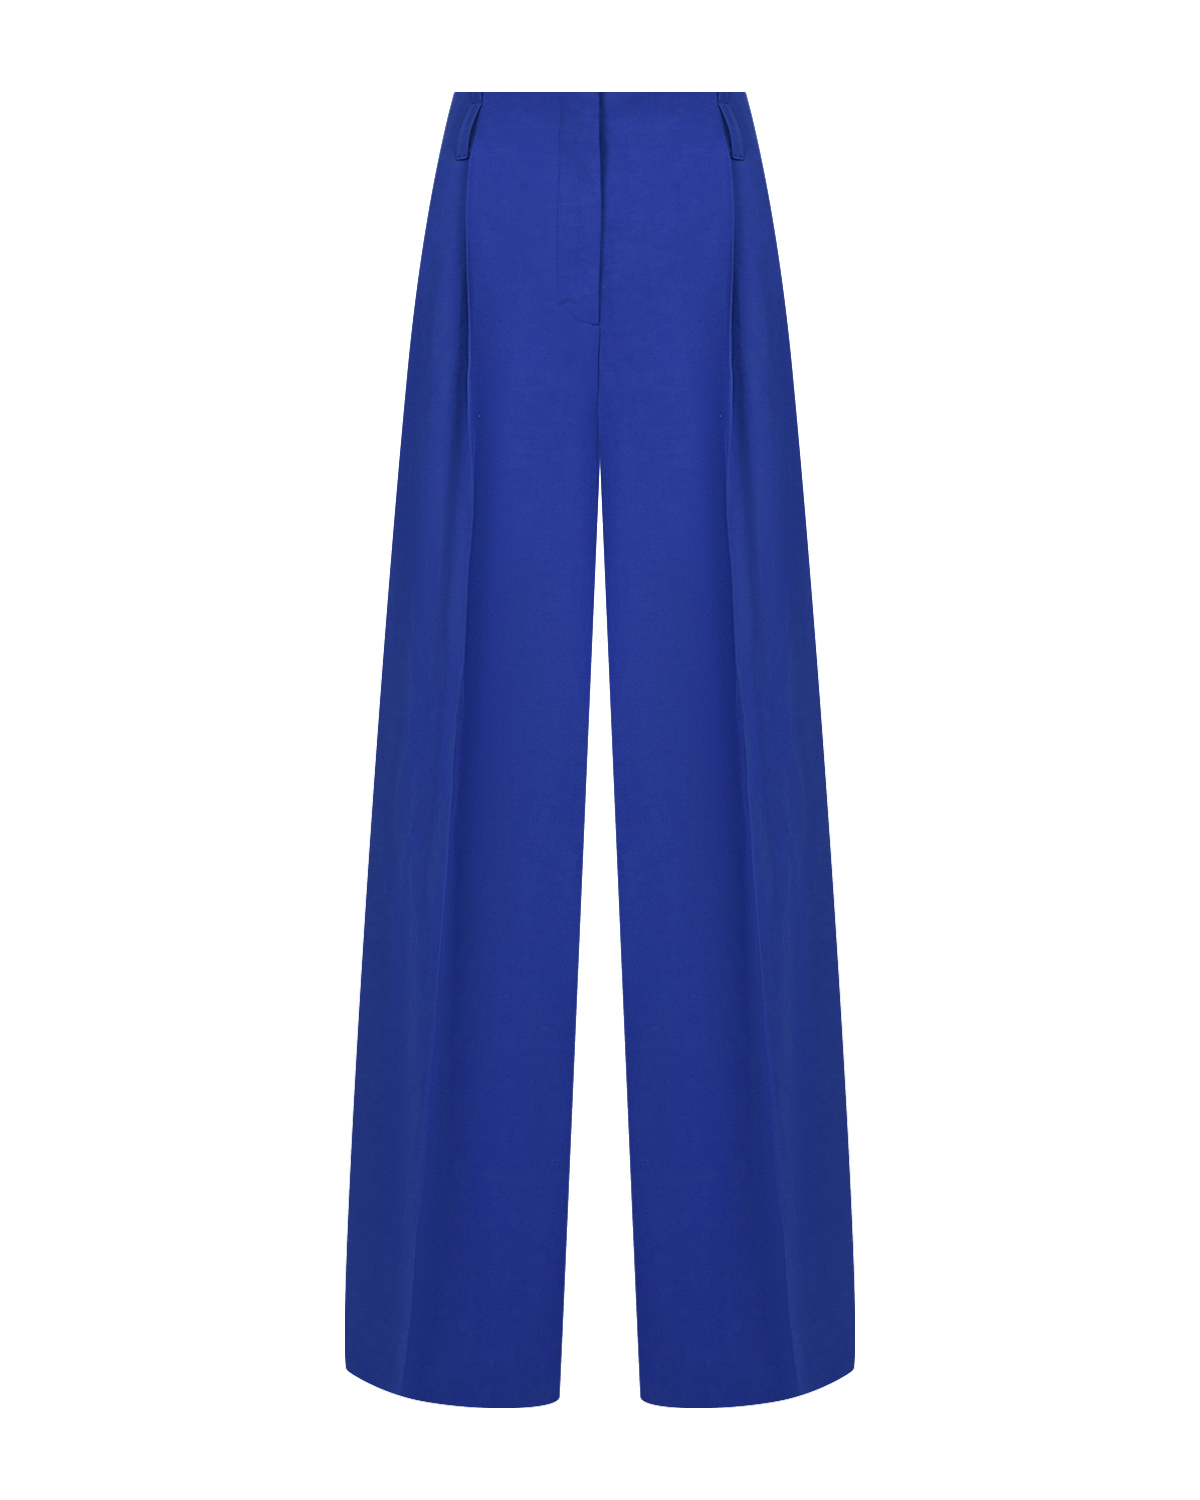 Синие брюки палаццо Dorothee Schumacher, размер 40, цвет синий - фото 1